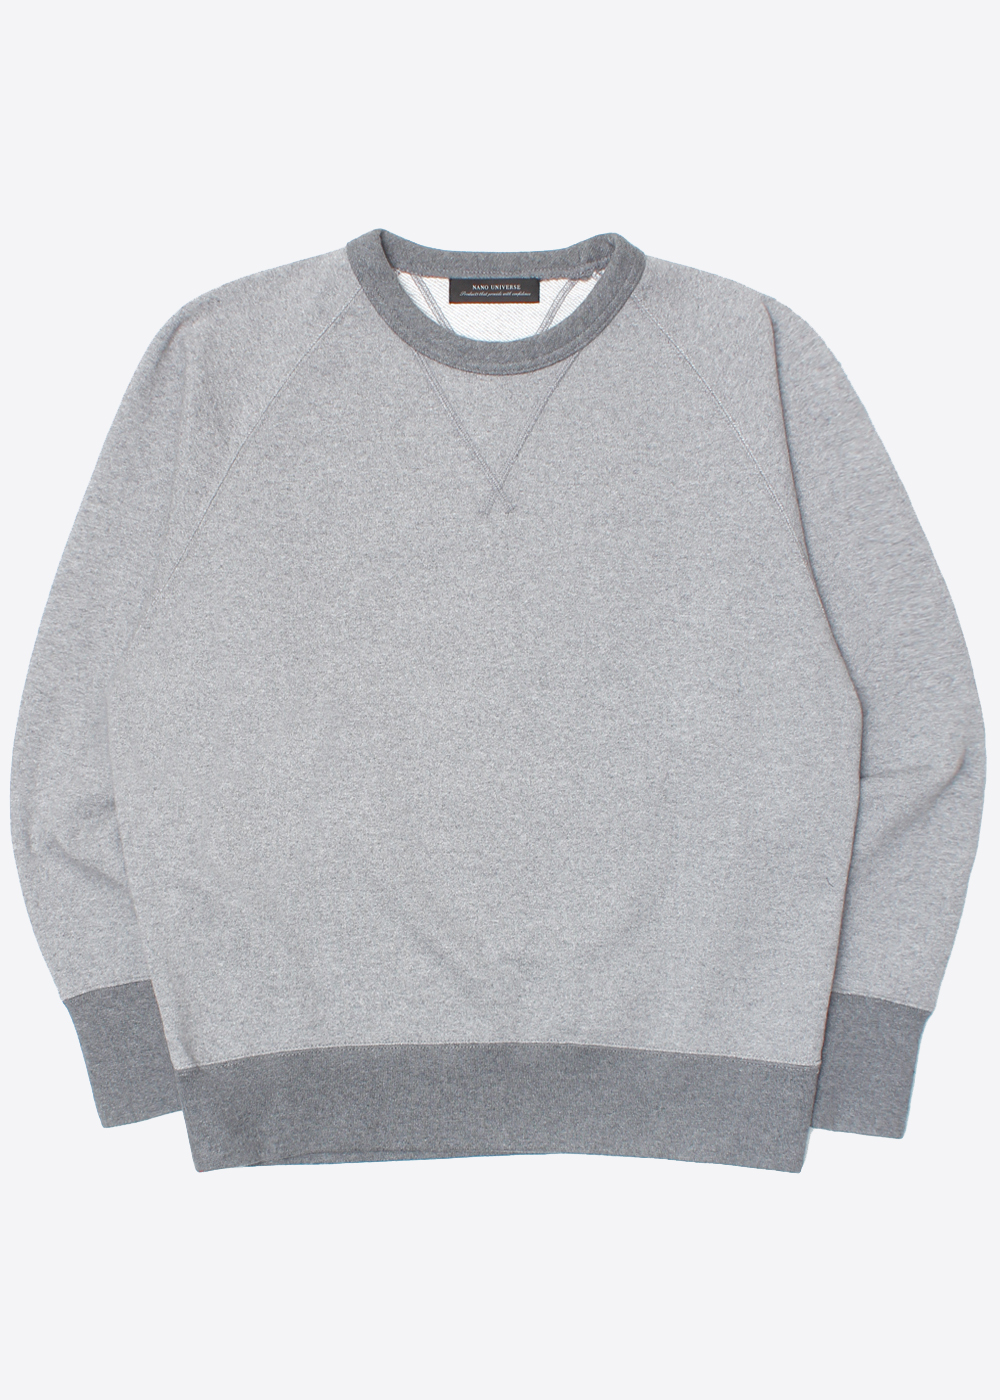 NANO UNIVERSE’over fit’stitch sweatshirt